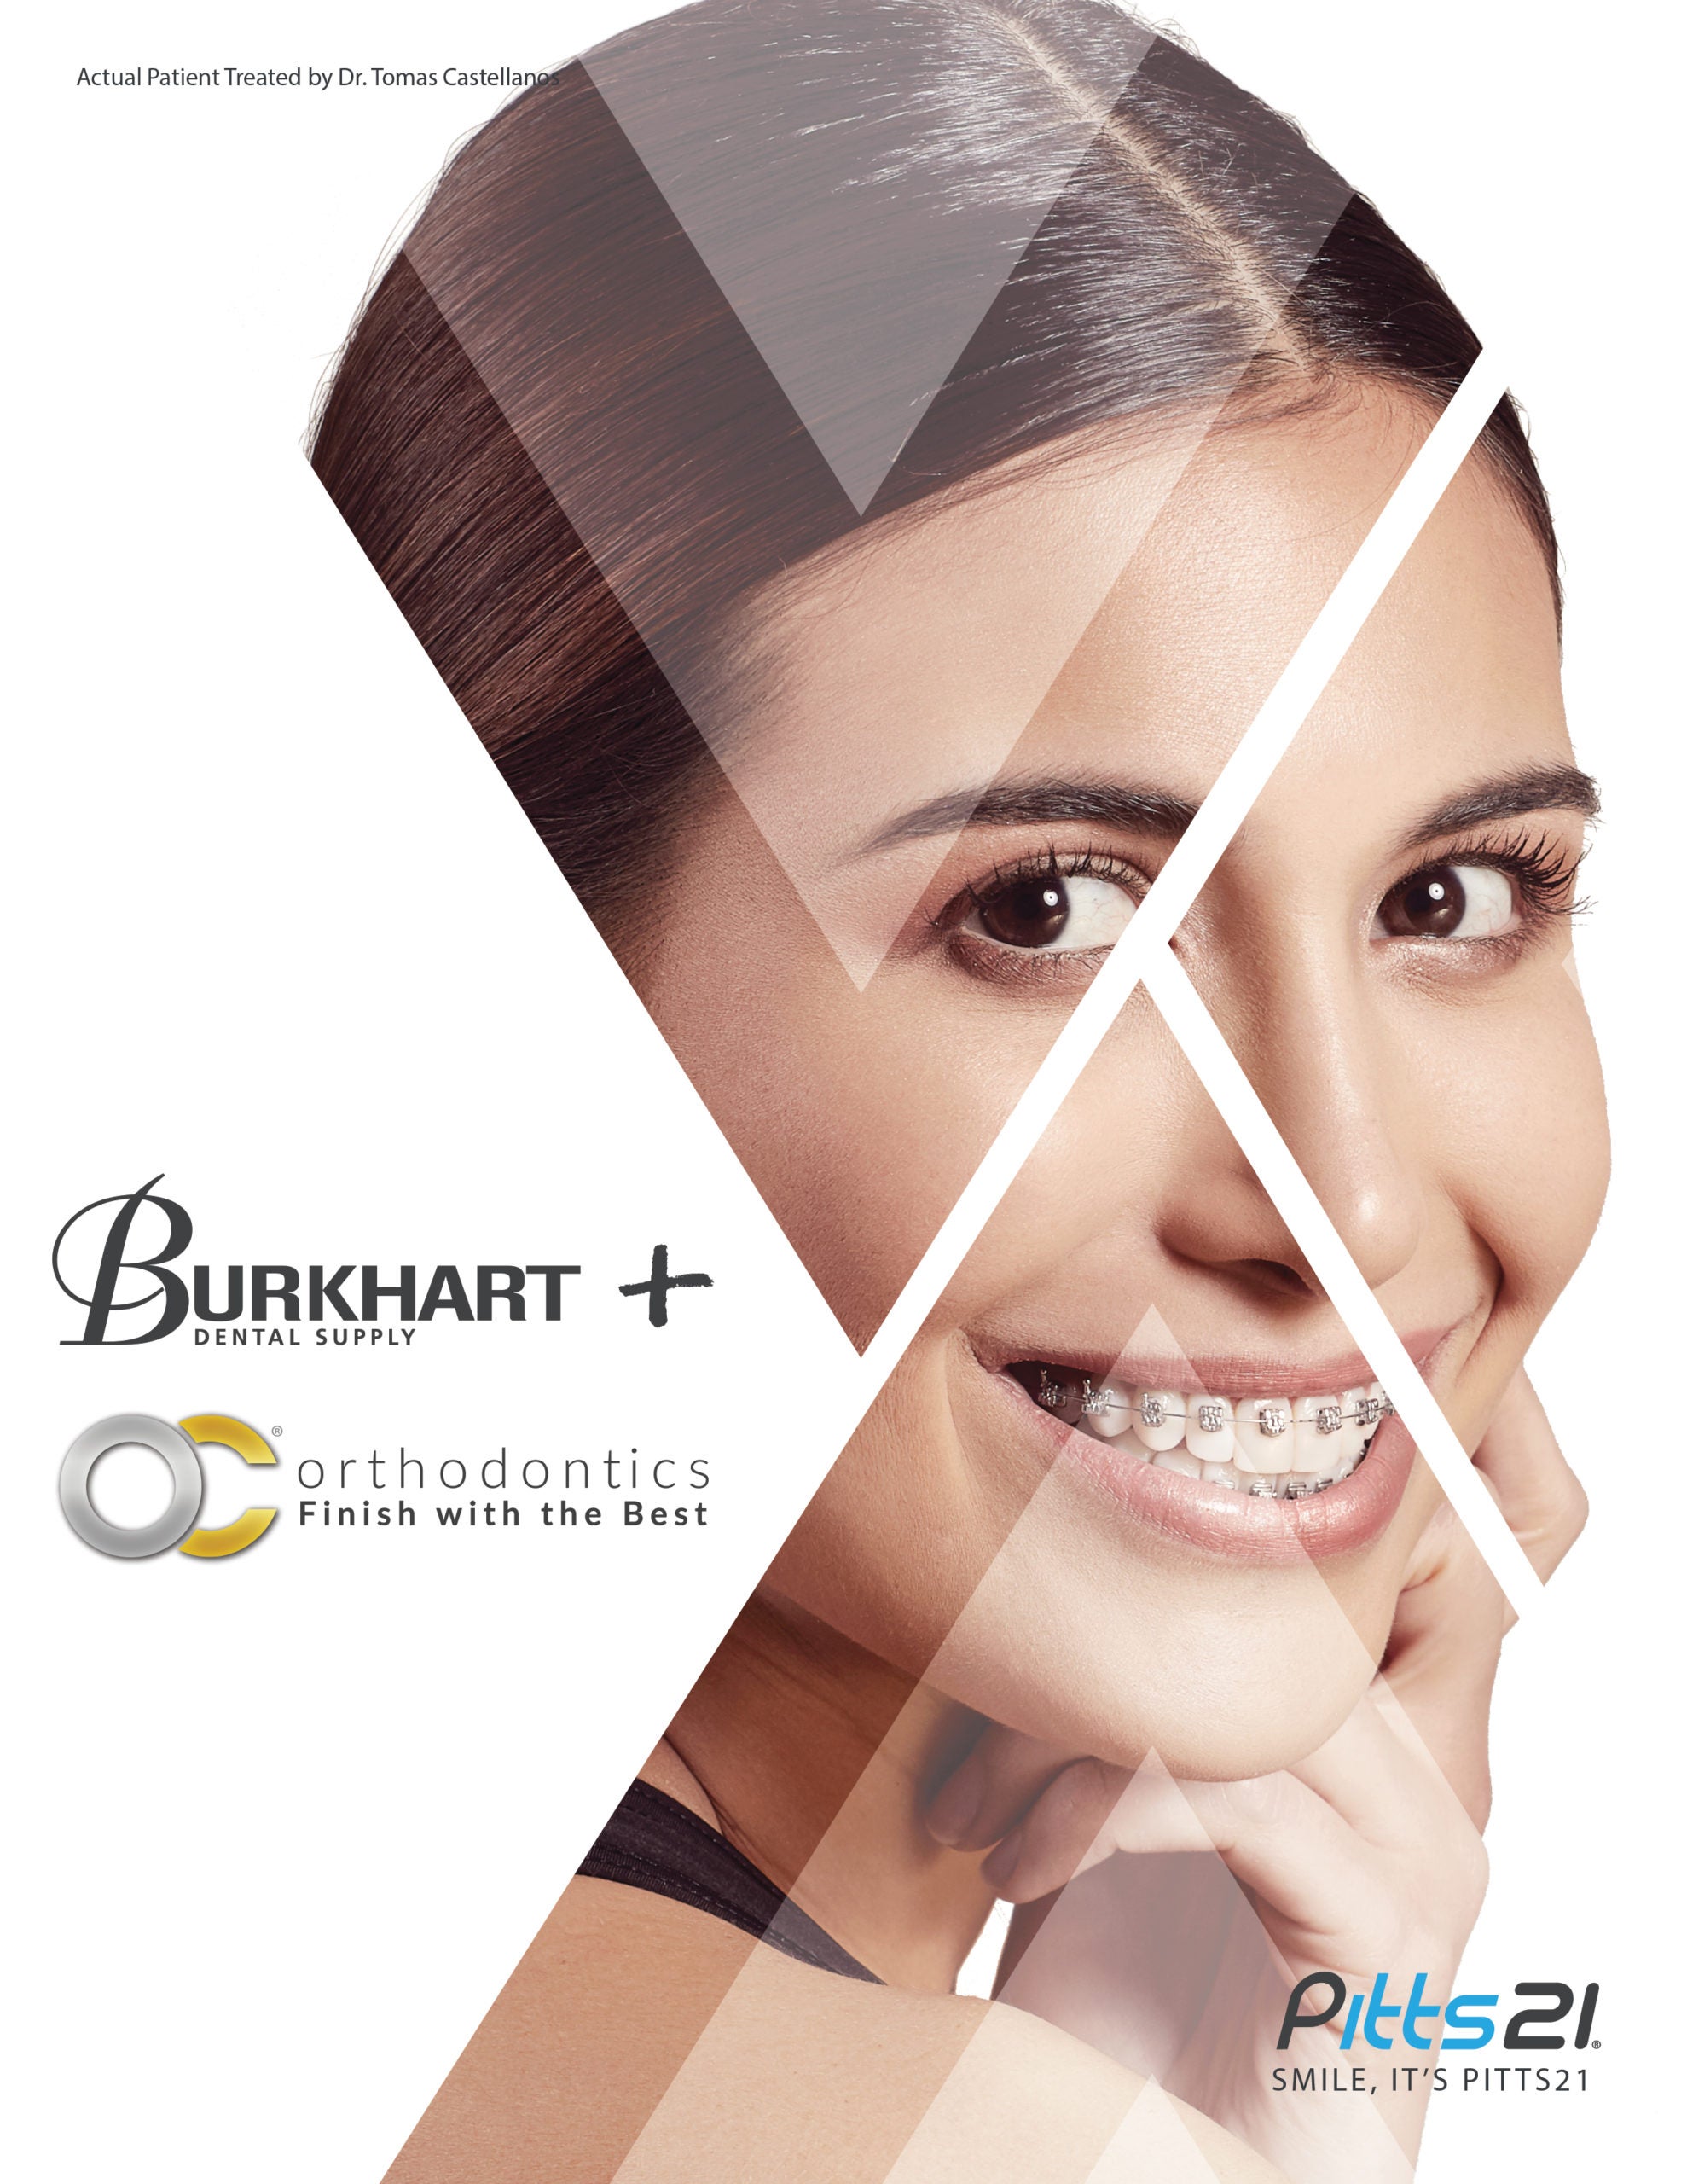 Burkhart + OC Orthodontics Catalog Cover